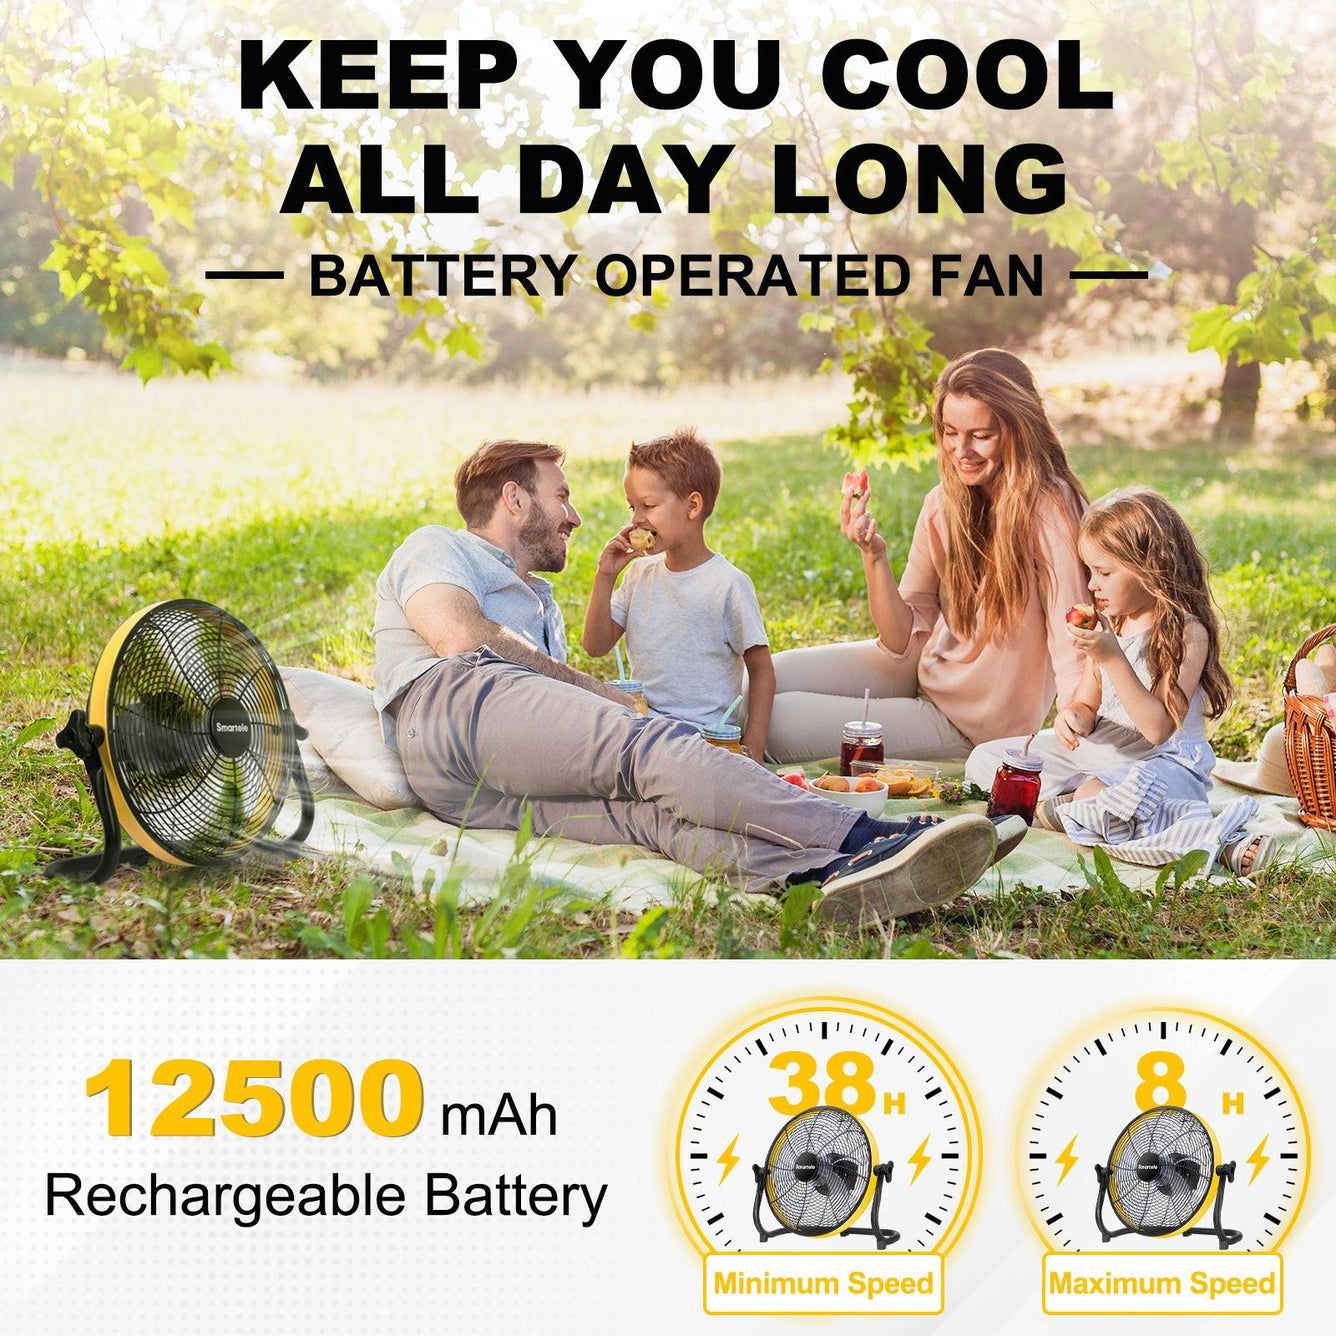 Smartele Portable Fan with 12500mAh Rechargeable Battery.